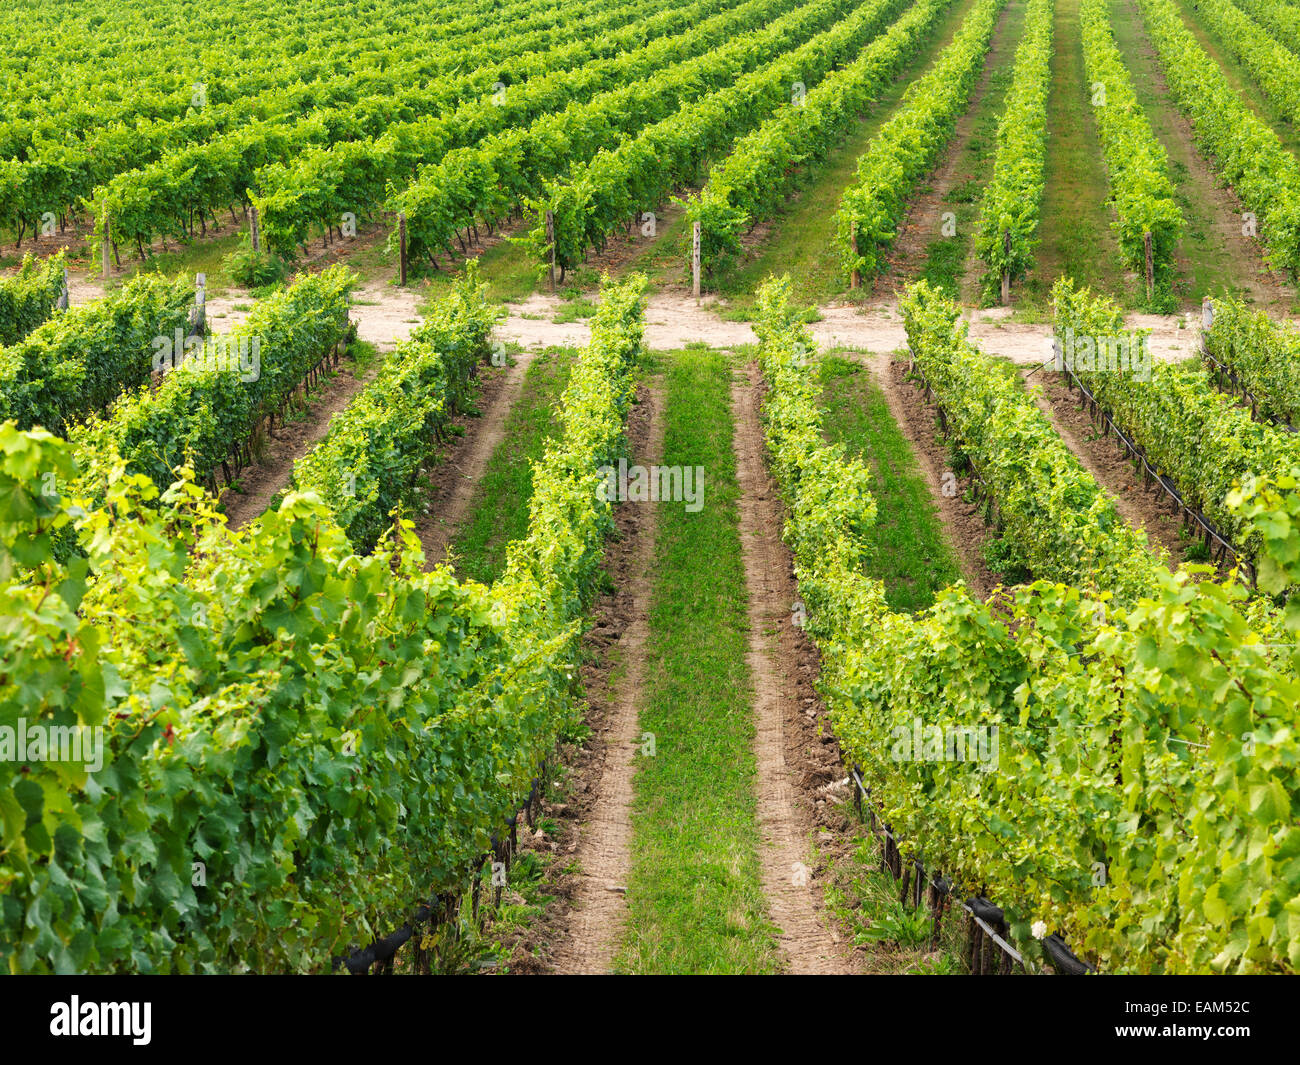 Canada,Ontario,Niagara-on-the-Lake, Ravine Winery vineyards Stock Photo